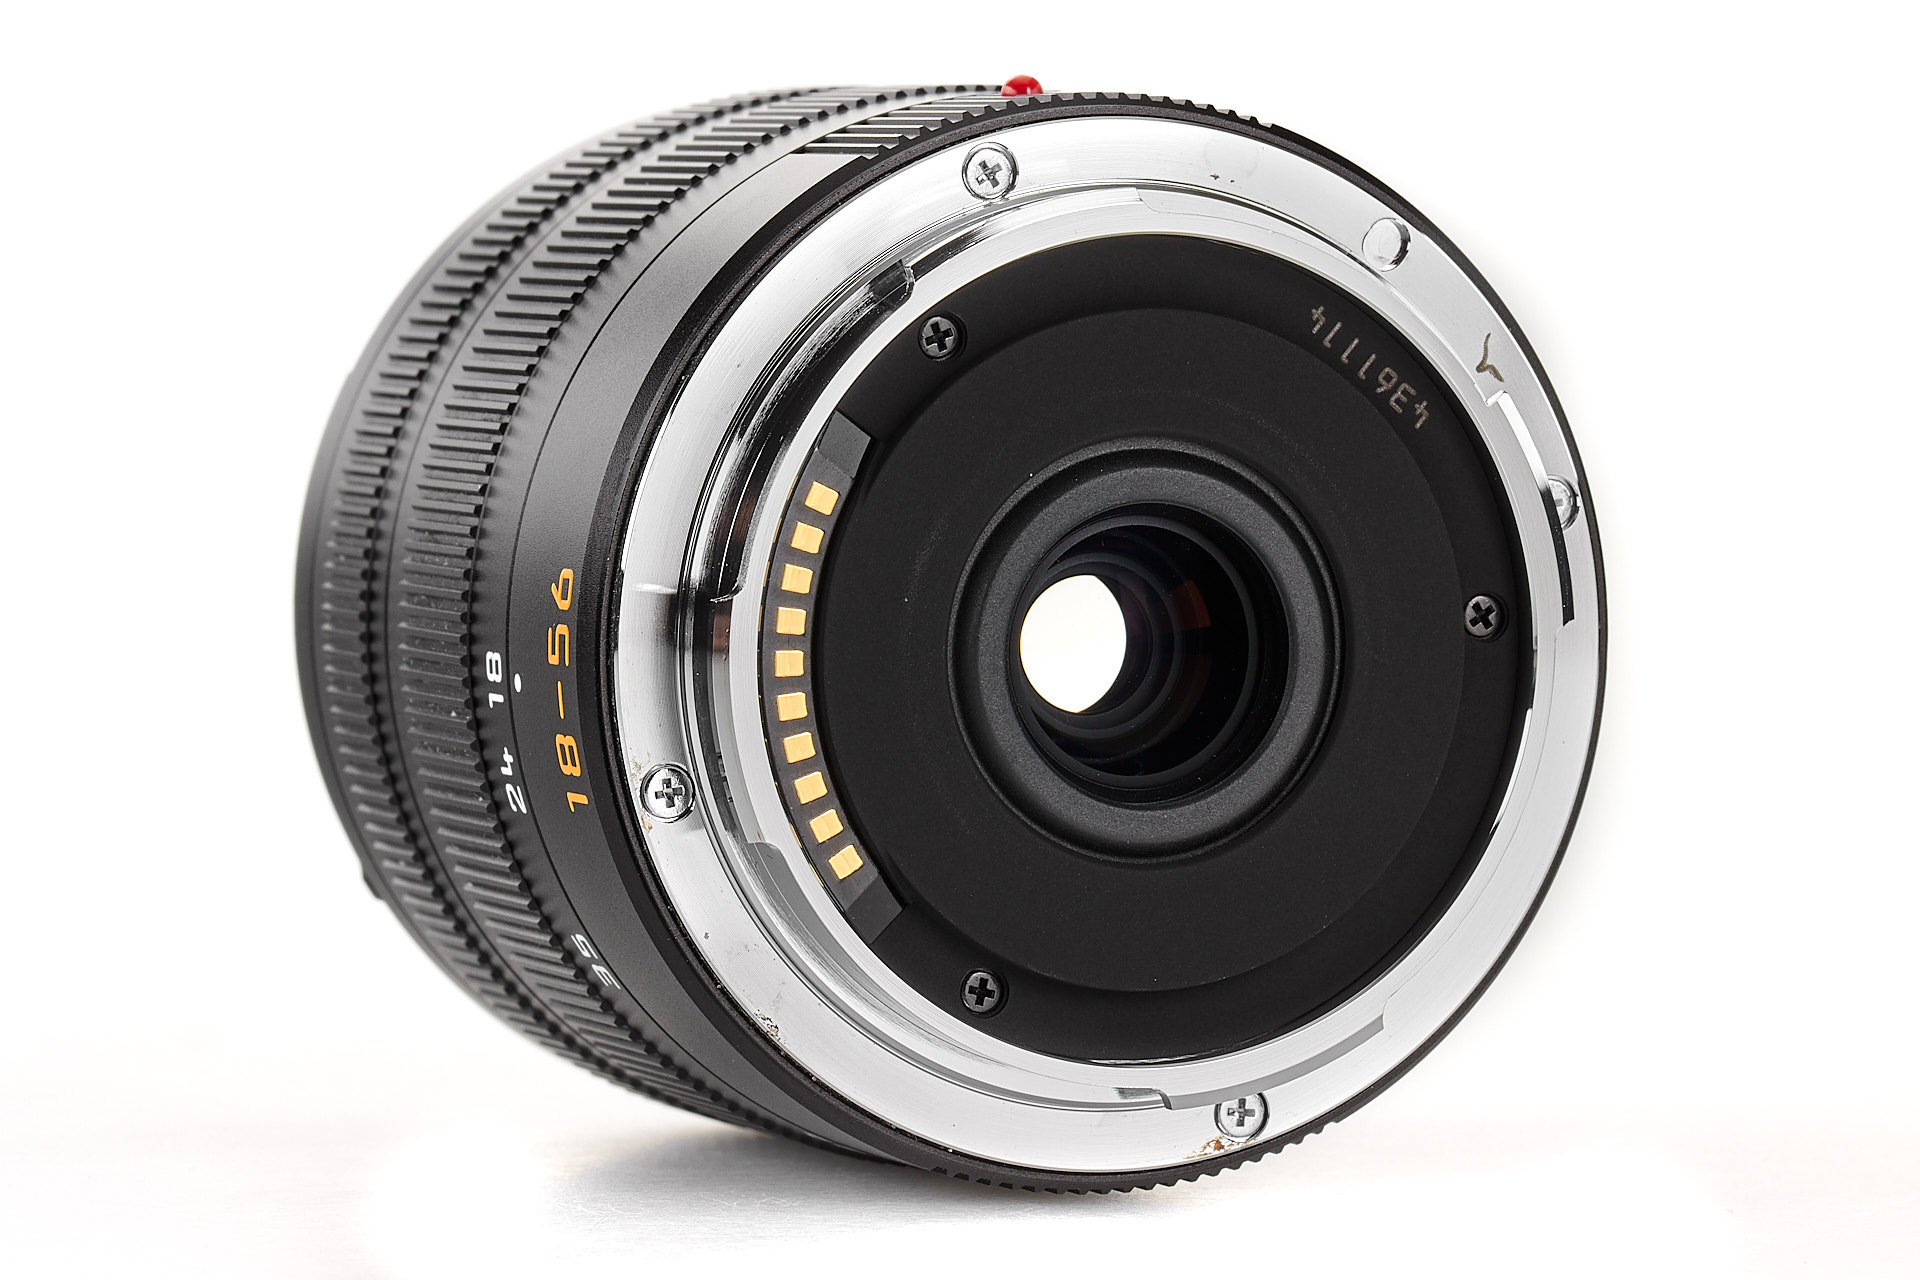 Leica Vario-Elmar-TL 18-56 mm. 1:3,5-5,6/18-56mm. ASPH. Black.